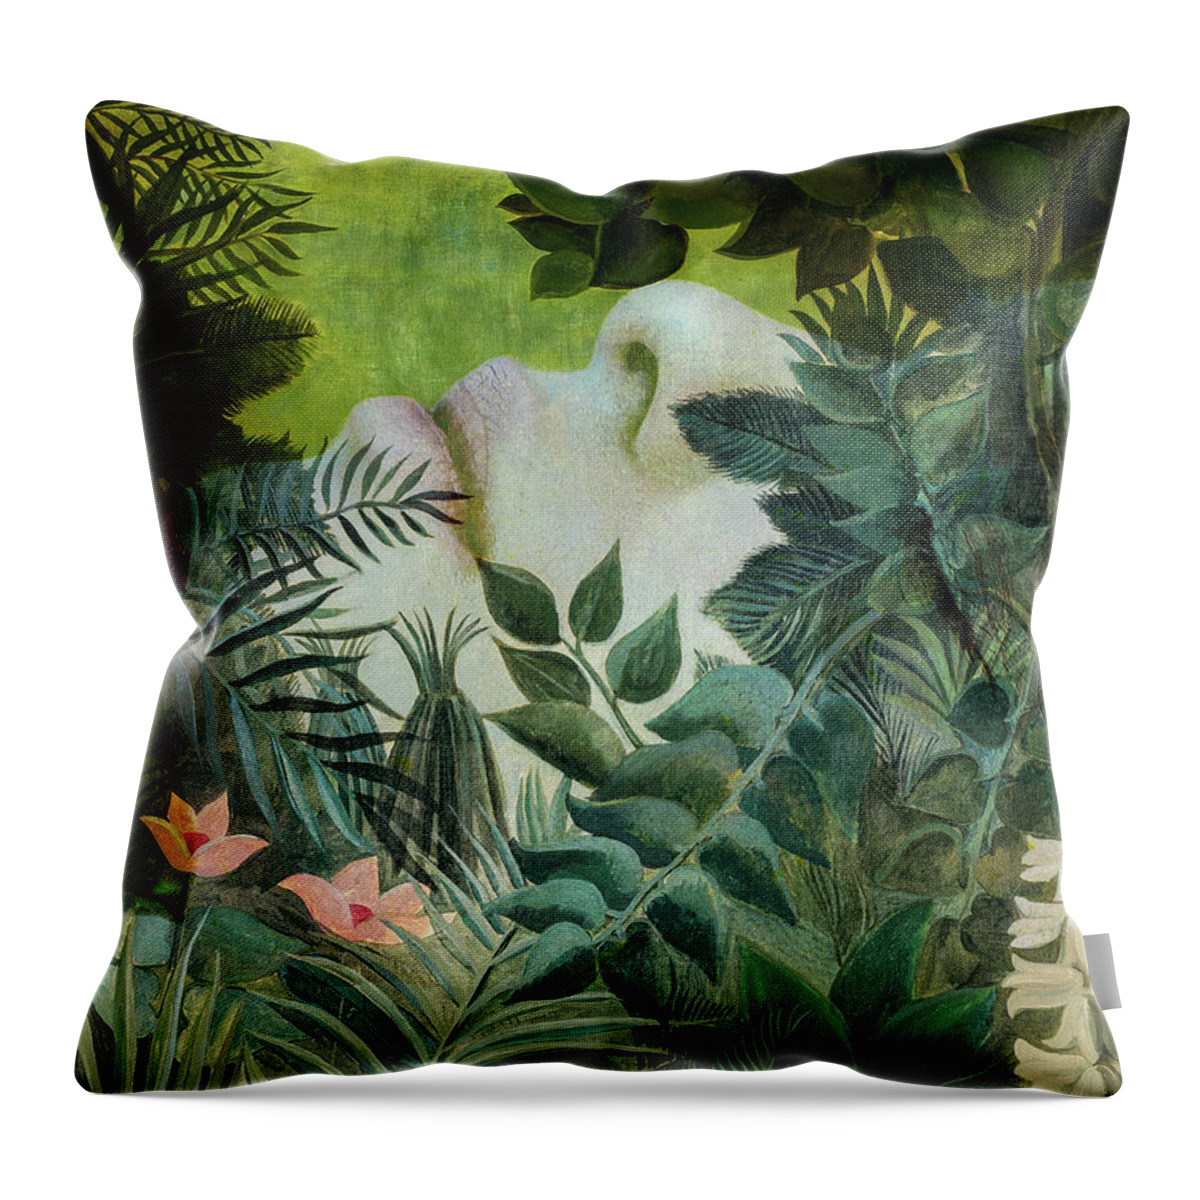 Digitalart Throw Pillow featuring the digital art Sleeping in the jungle by Gabi Hampe